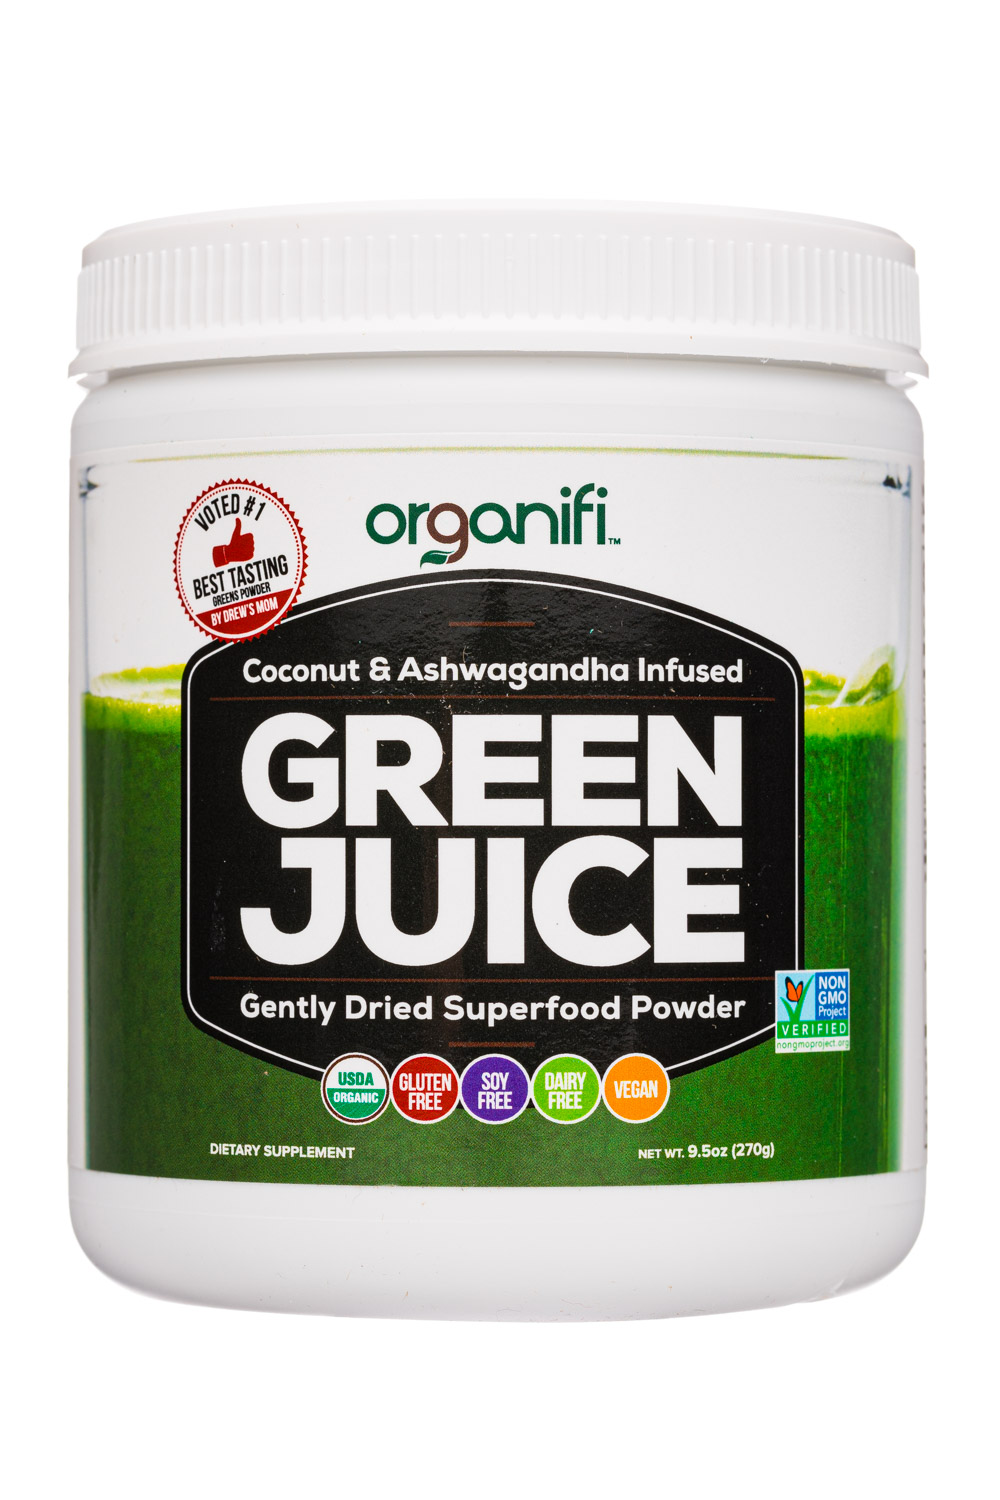 What Does Buy Organifi Green Juice Powder - Uk Stockist - Healf Mean?